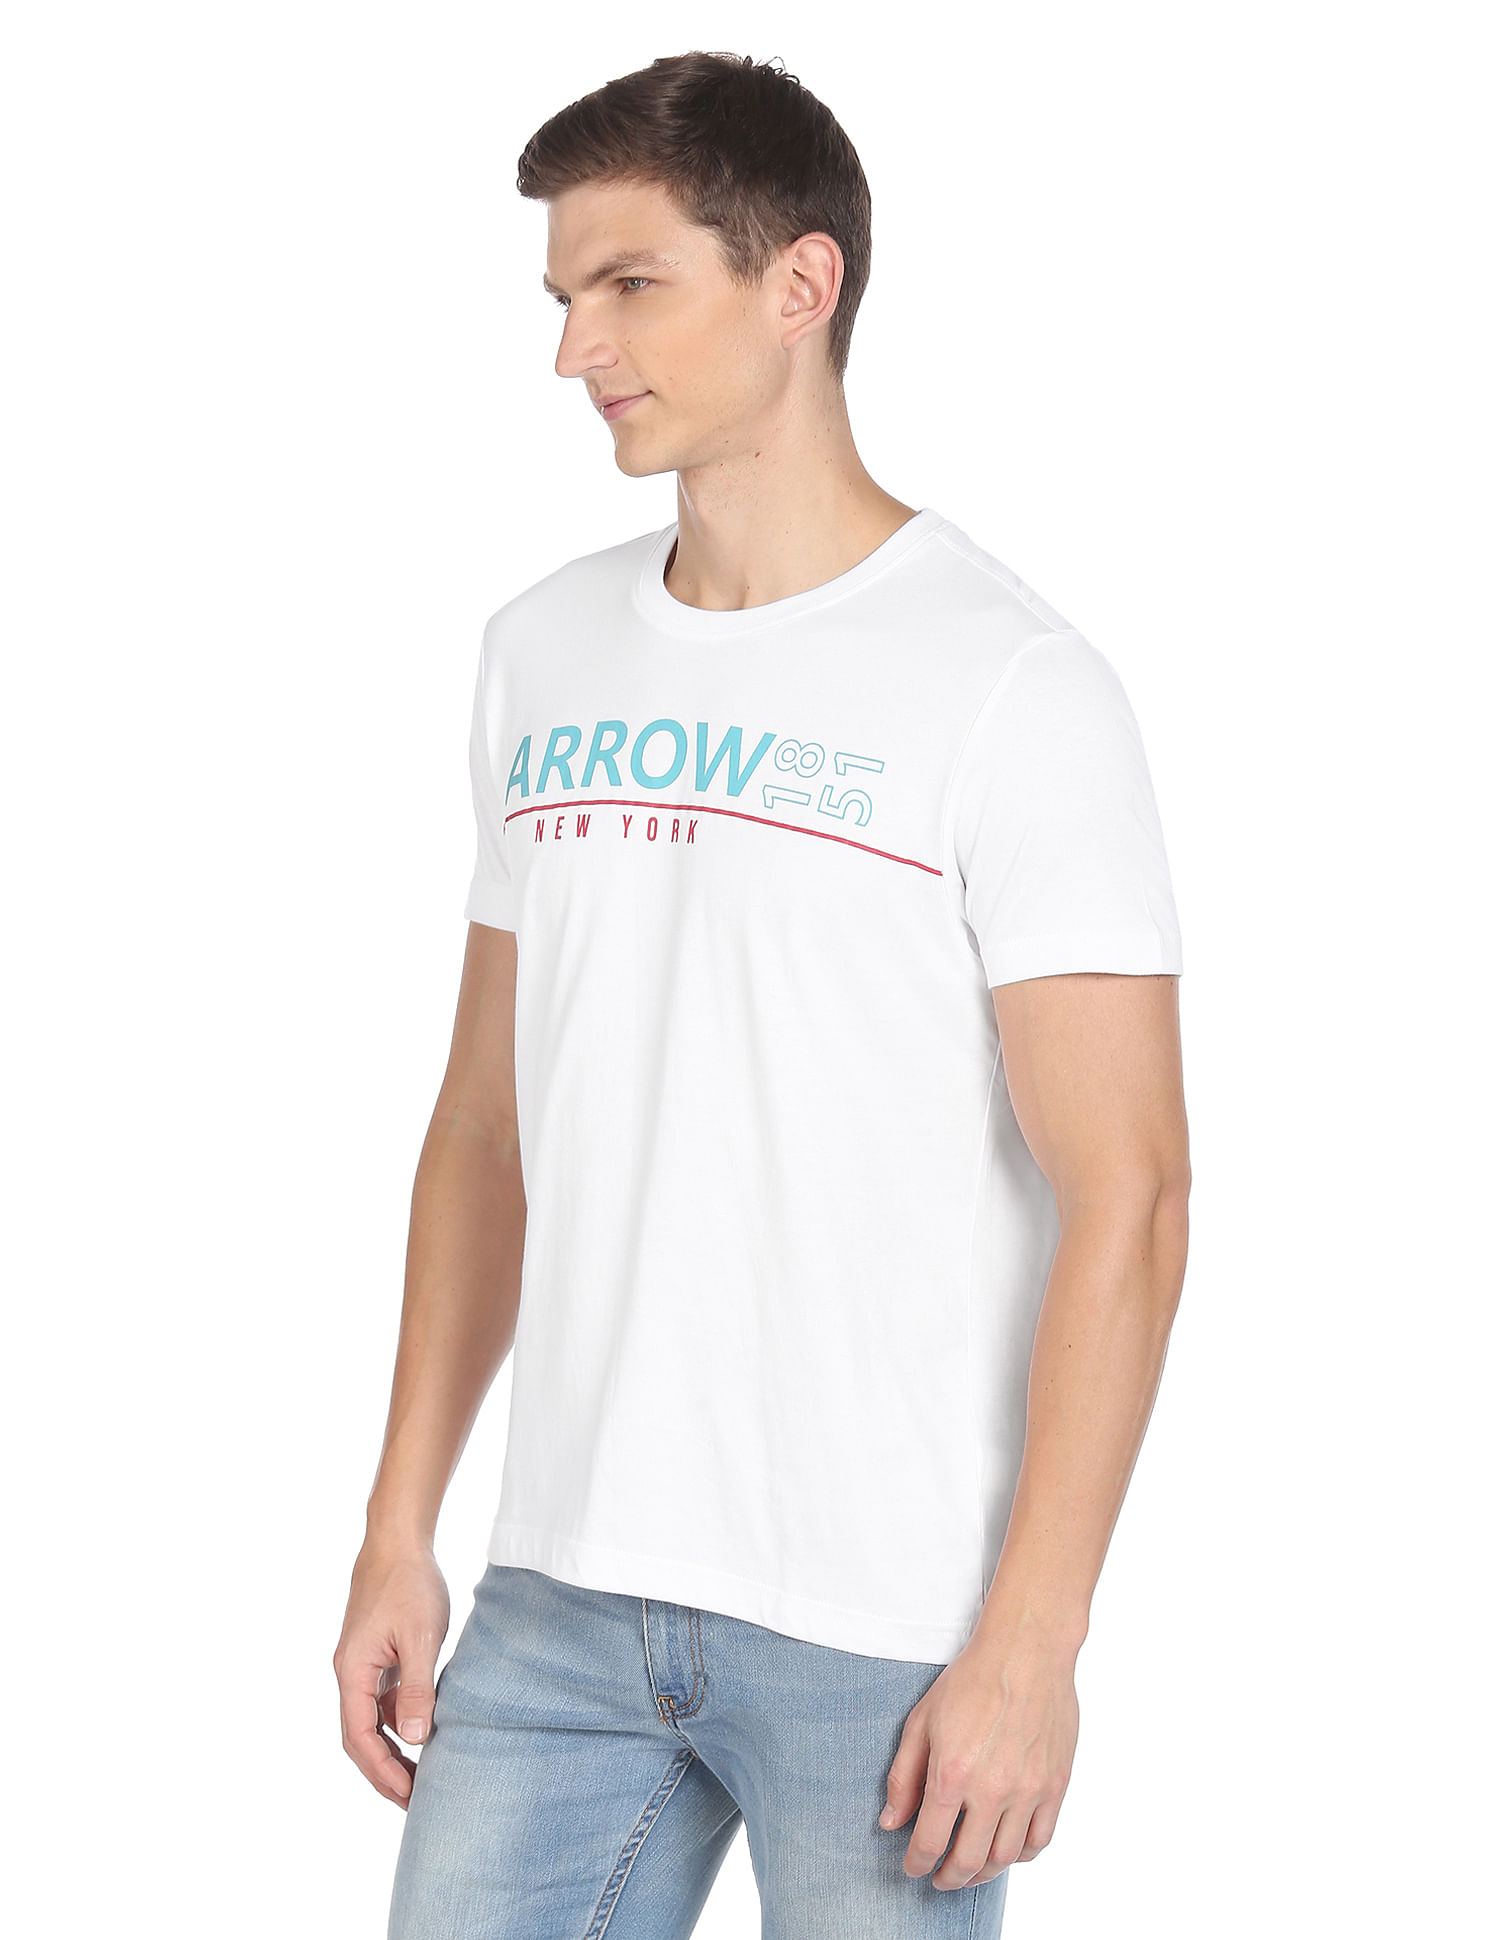 Pure T-Shirt Print Brand Men Buy Sports White Cotton Arrow